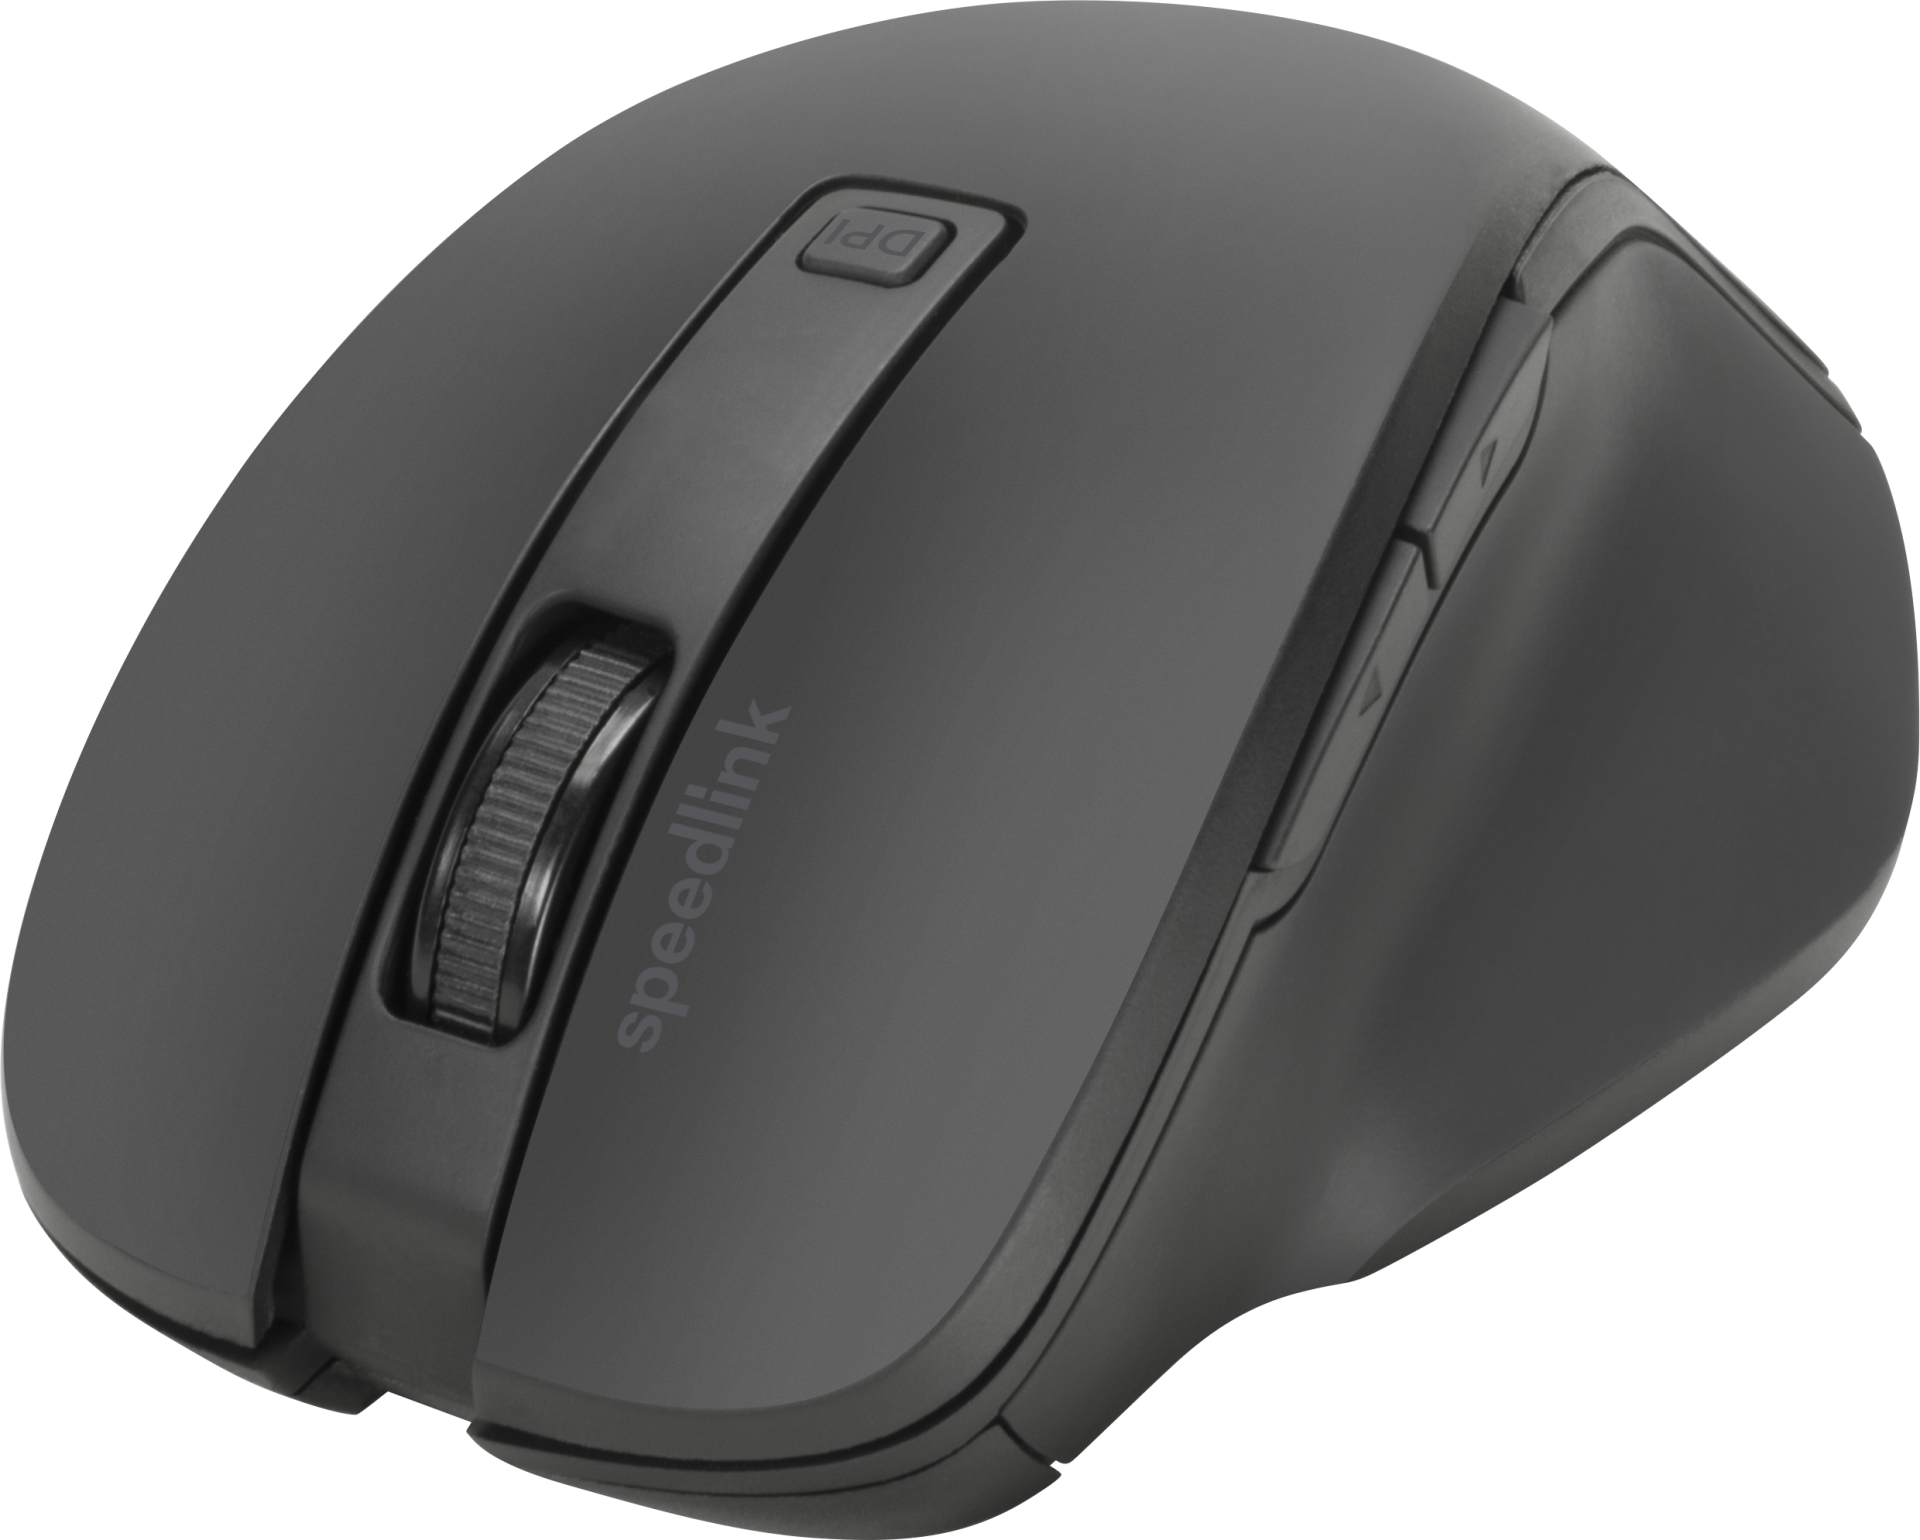 Speedlink - Calado Compact Silent Mouse